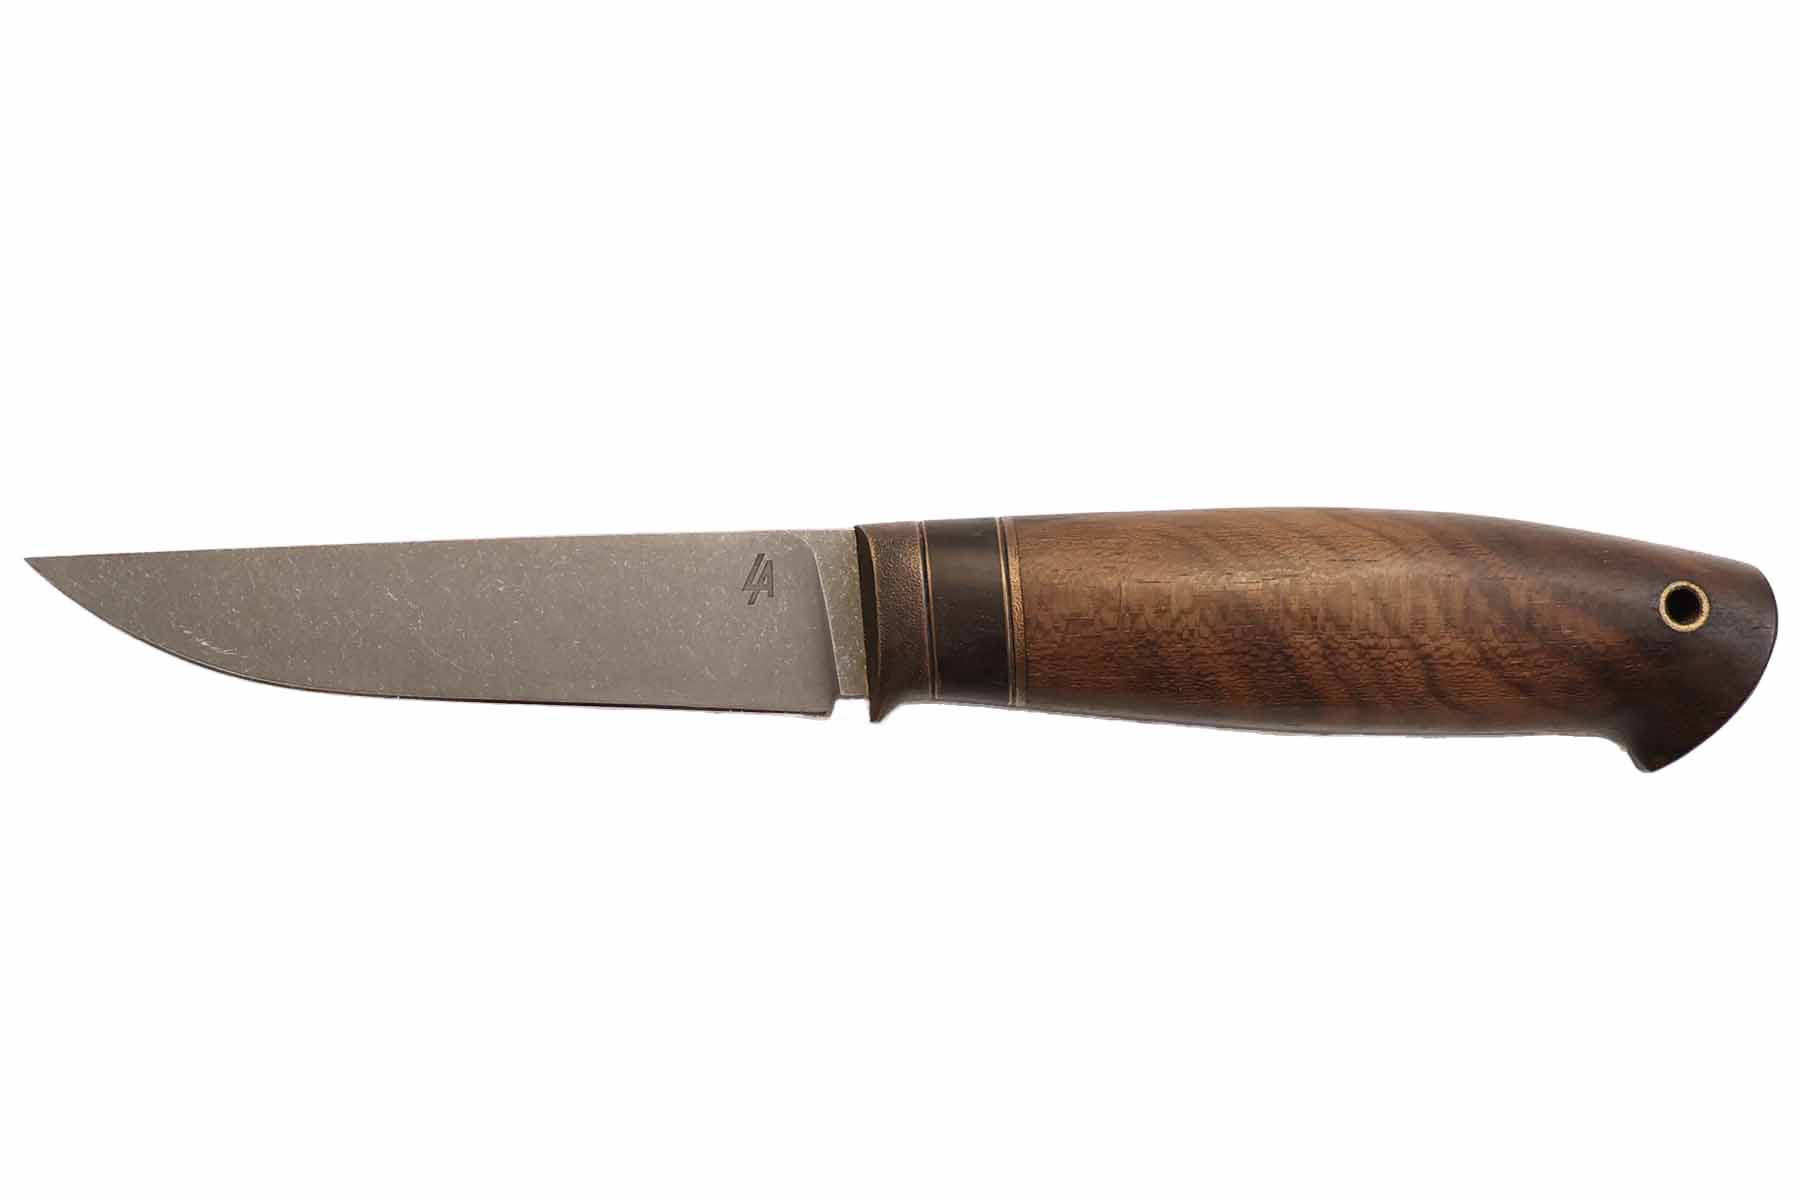 Couteau fixe artisanal "Lart-knives" manche en ziricote